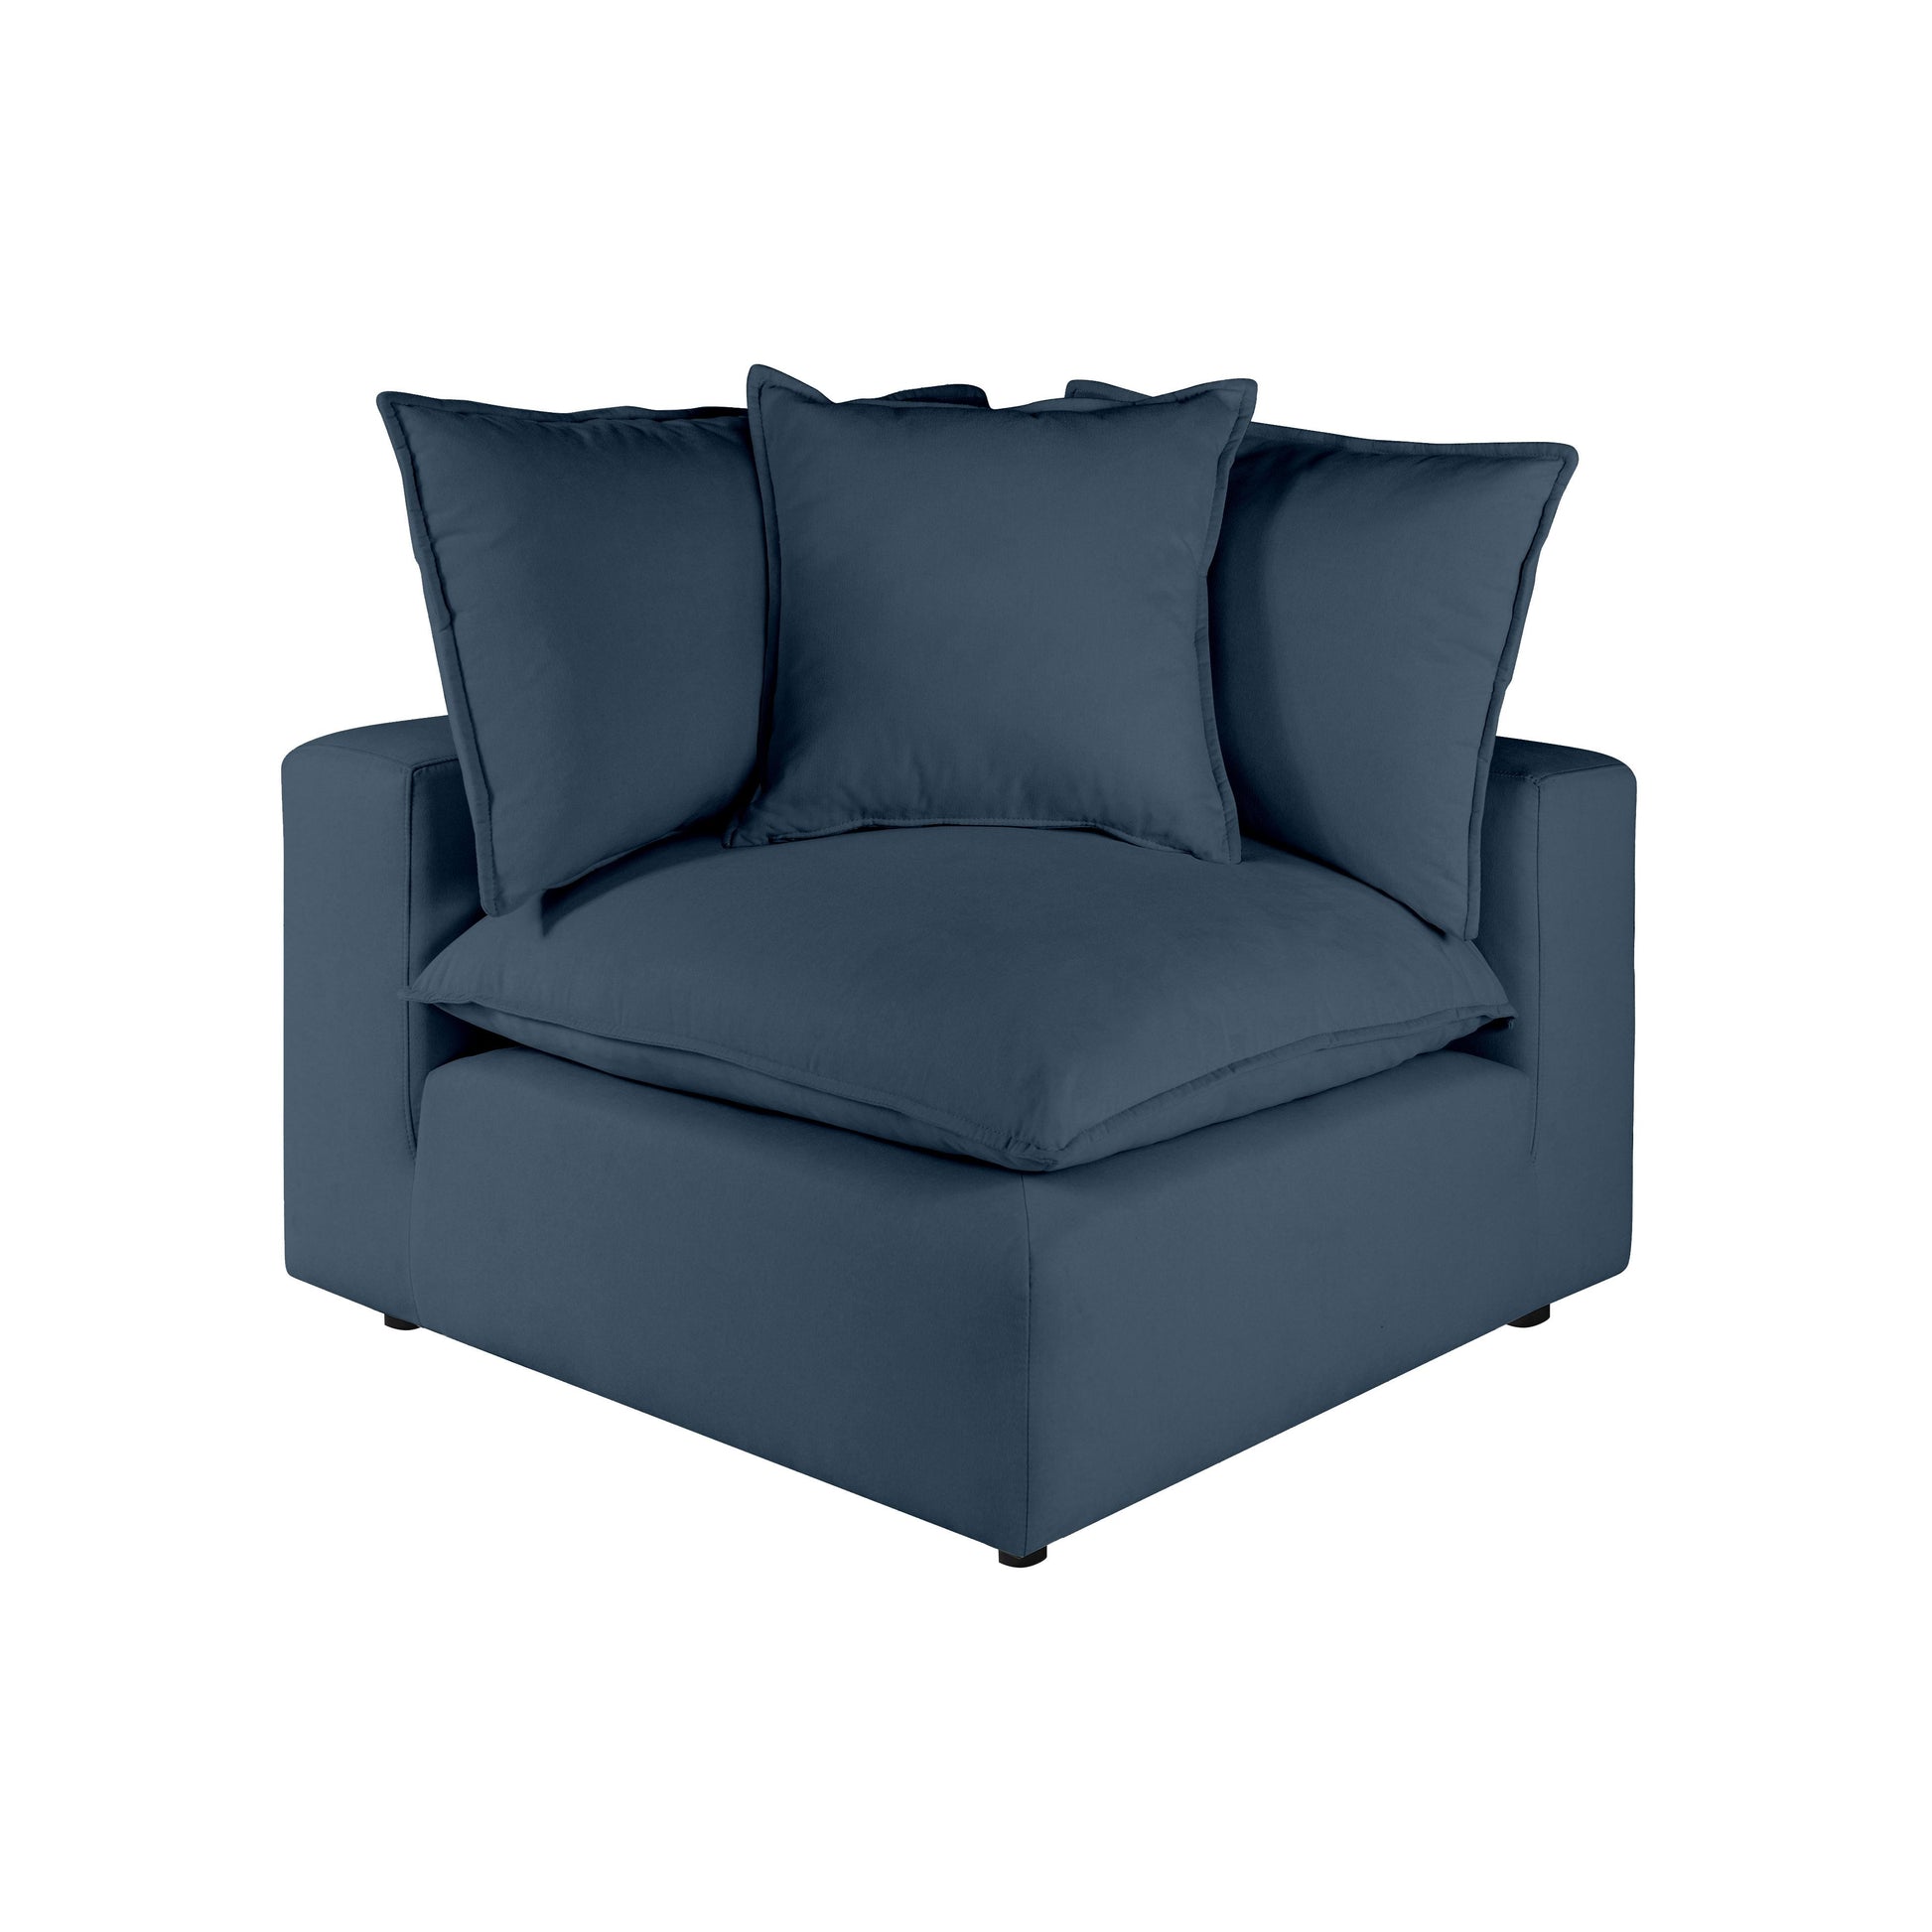 Tov Furniture Cali Navy Corner Chair